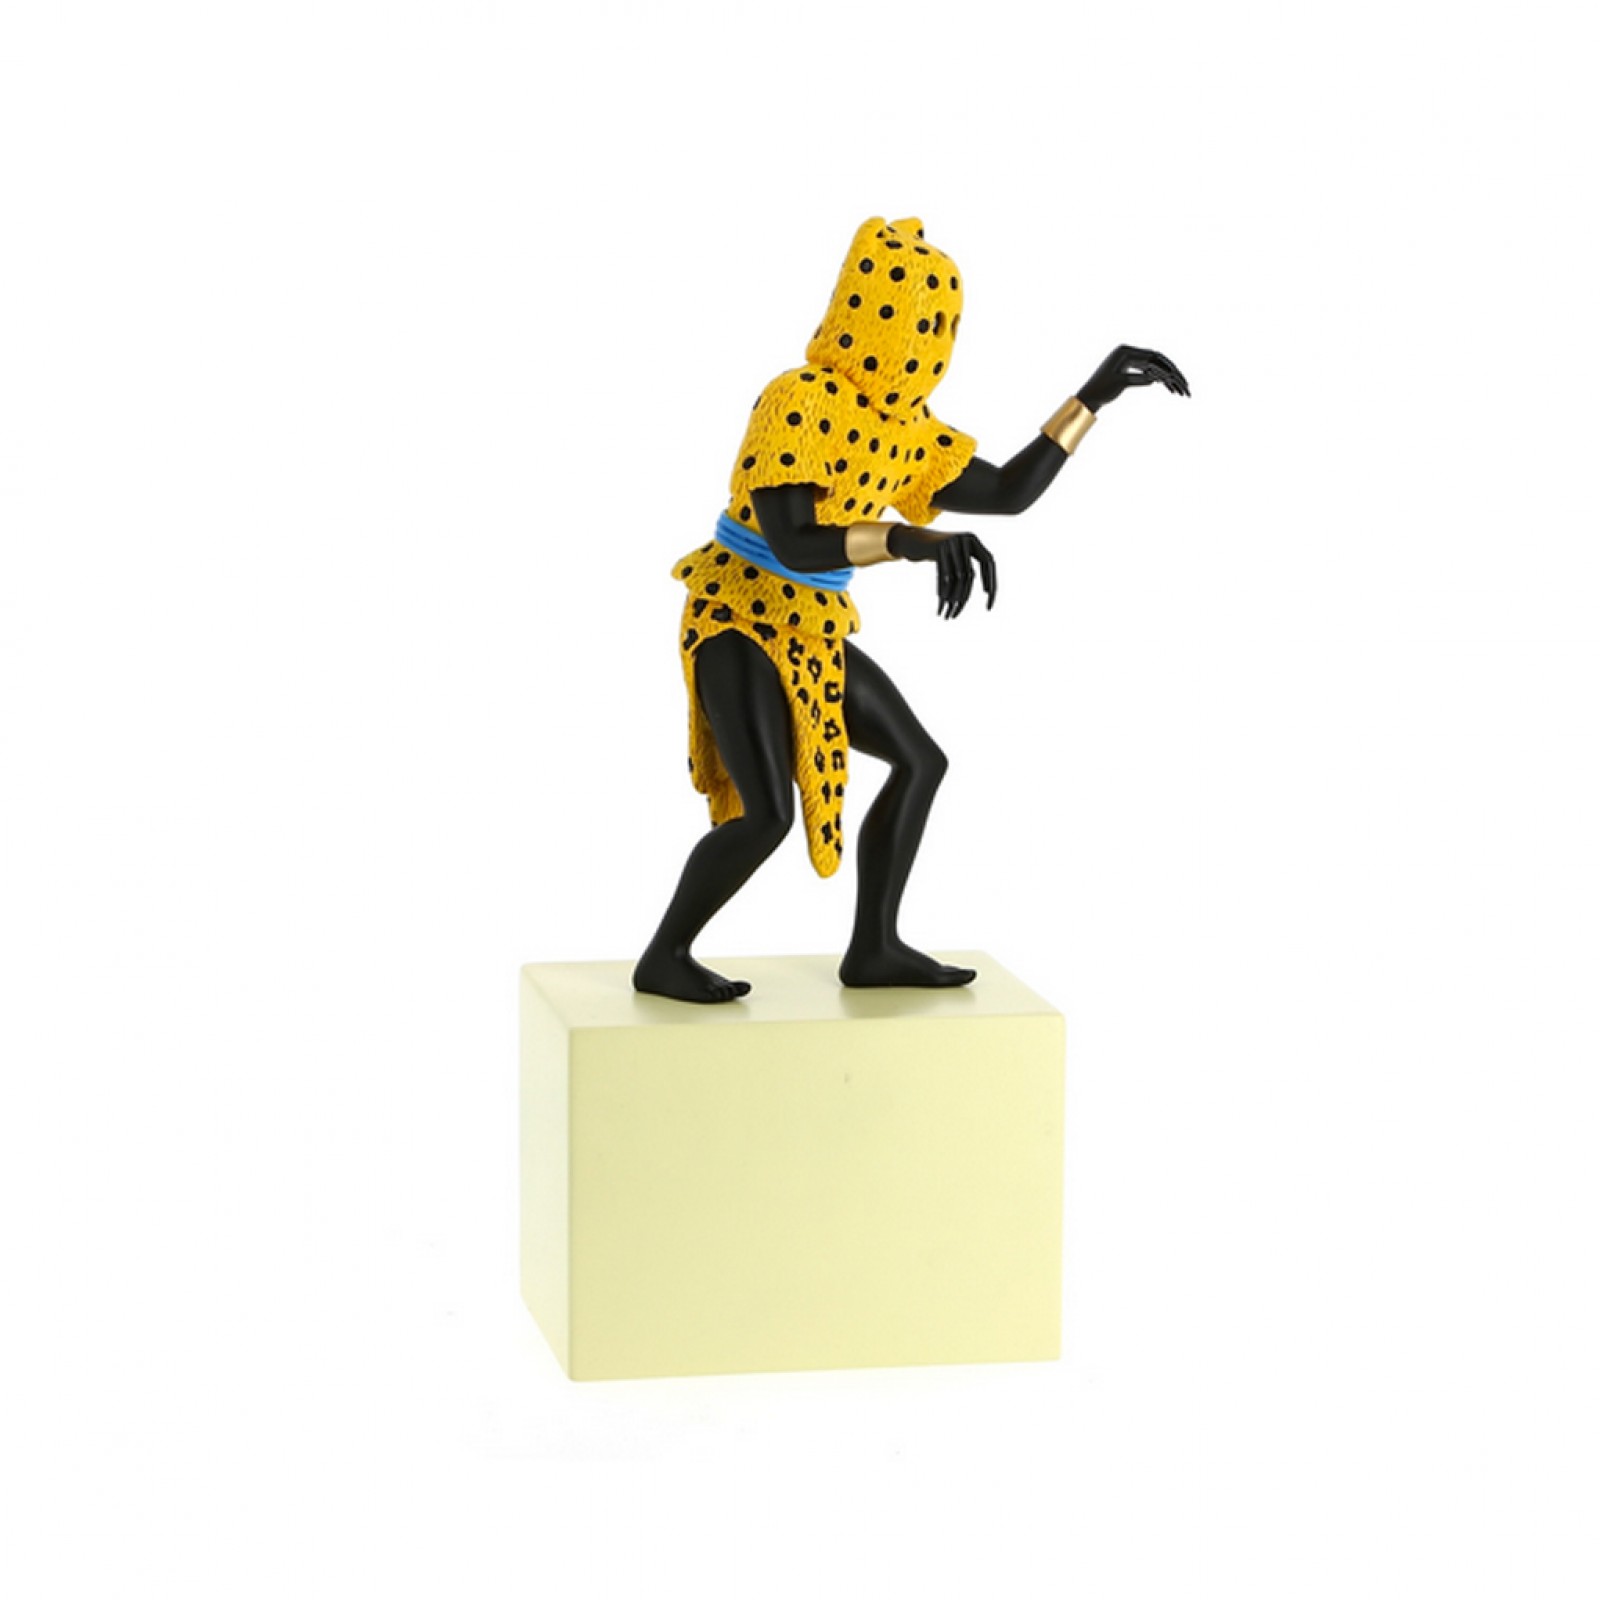 Figurine-L'Homme Léopard, musée imaginaire de Tintin - Figurines